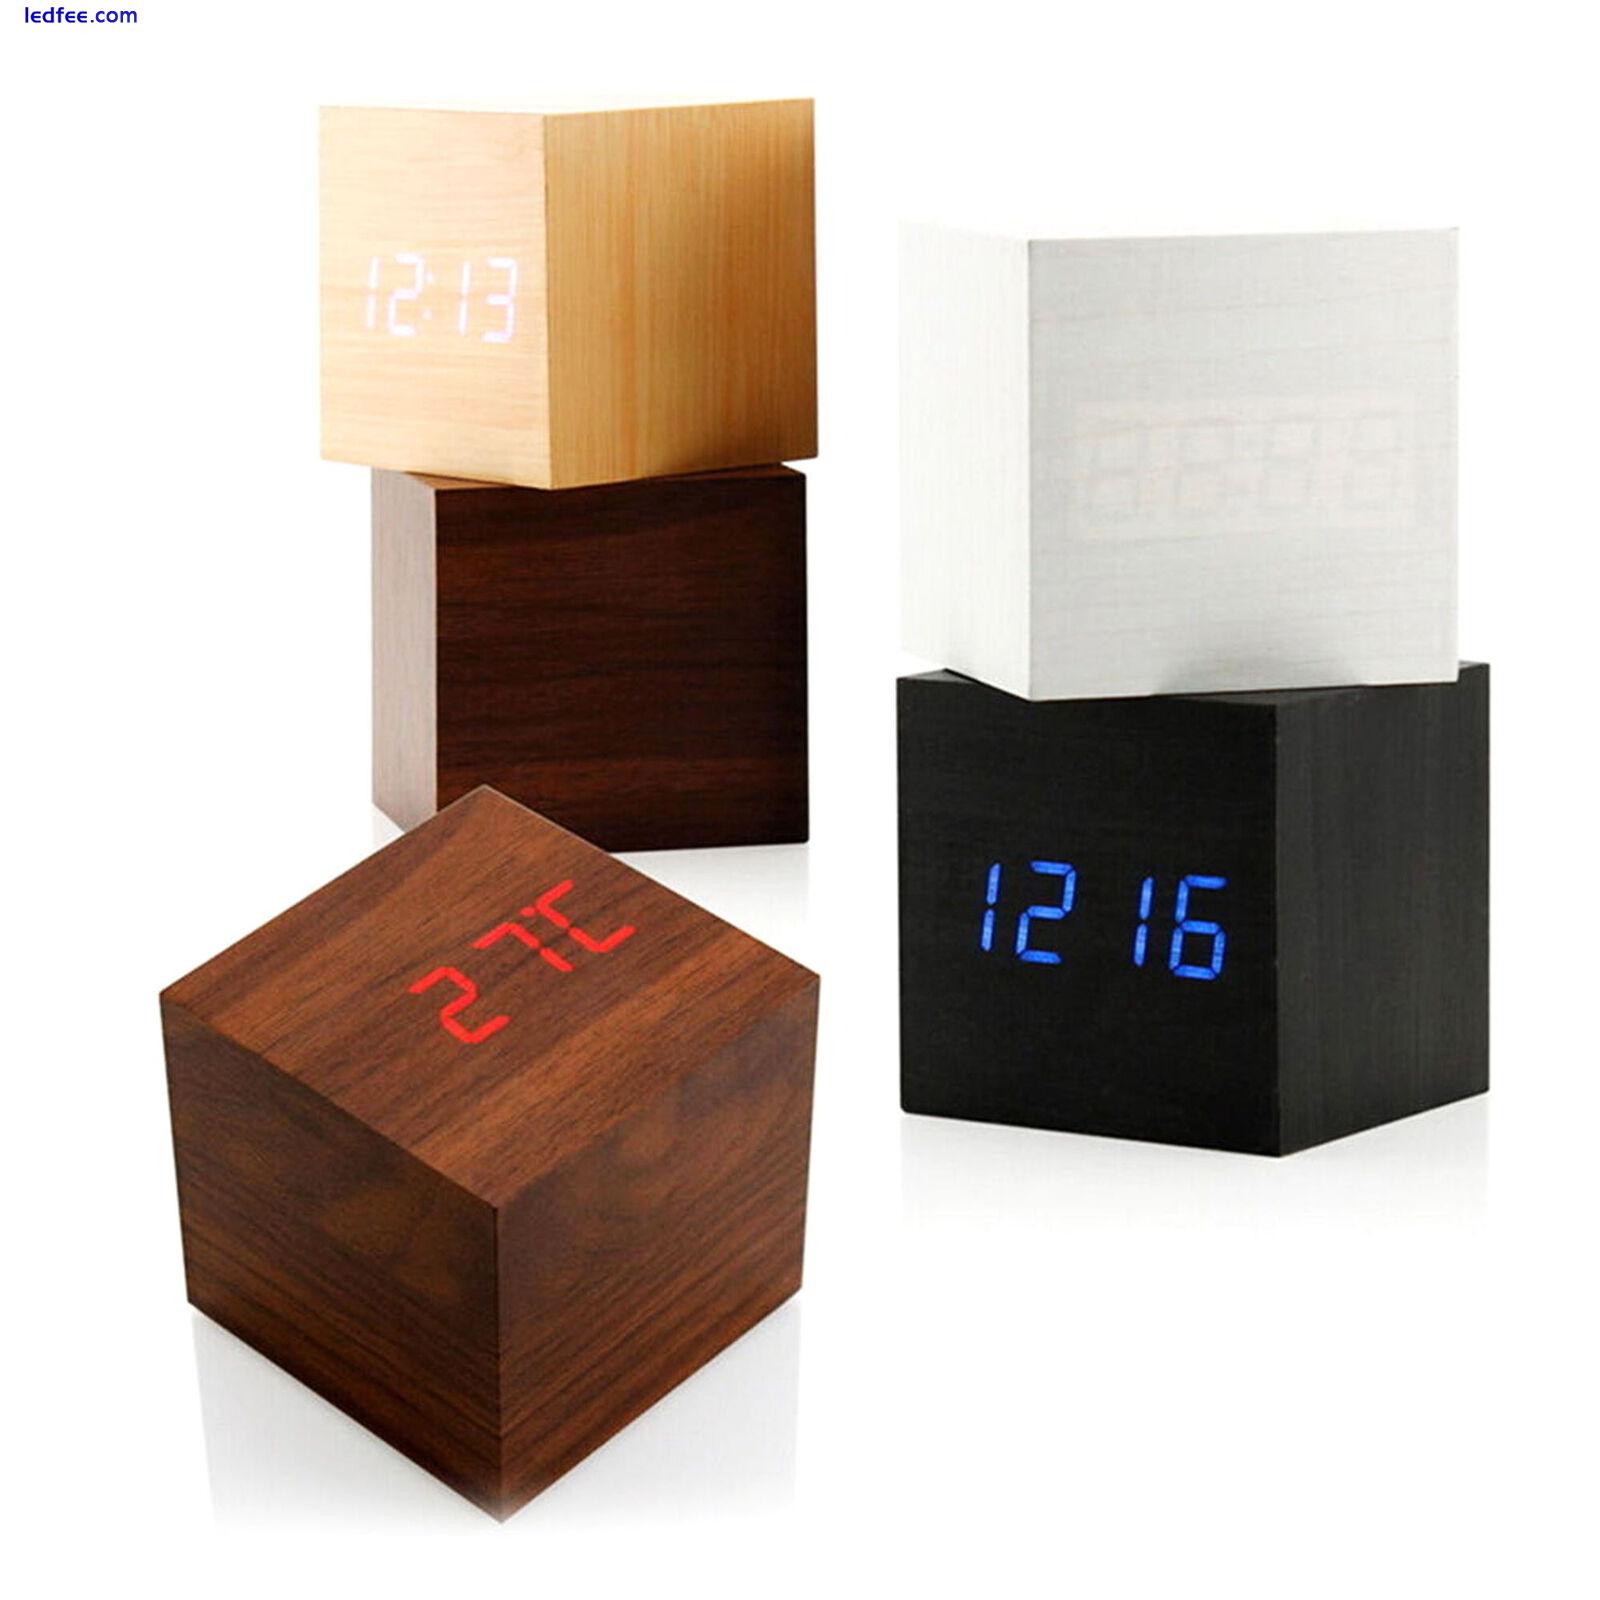 USB Cube Square Digital LED Alarm Clock Wooden Calendar Thermometer Home Decor 3 